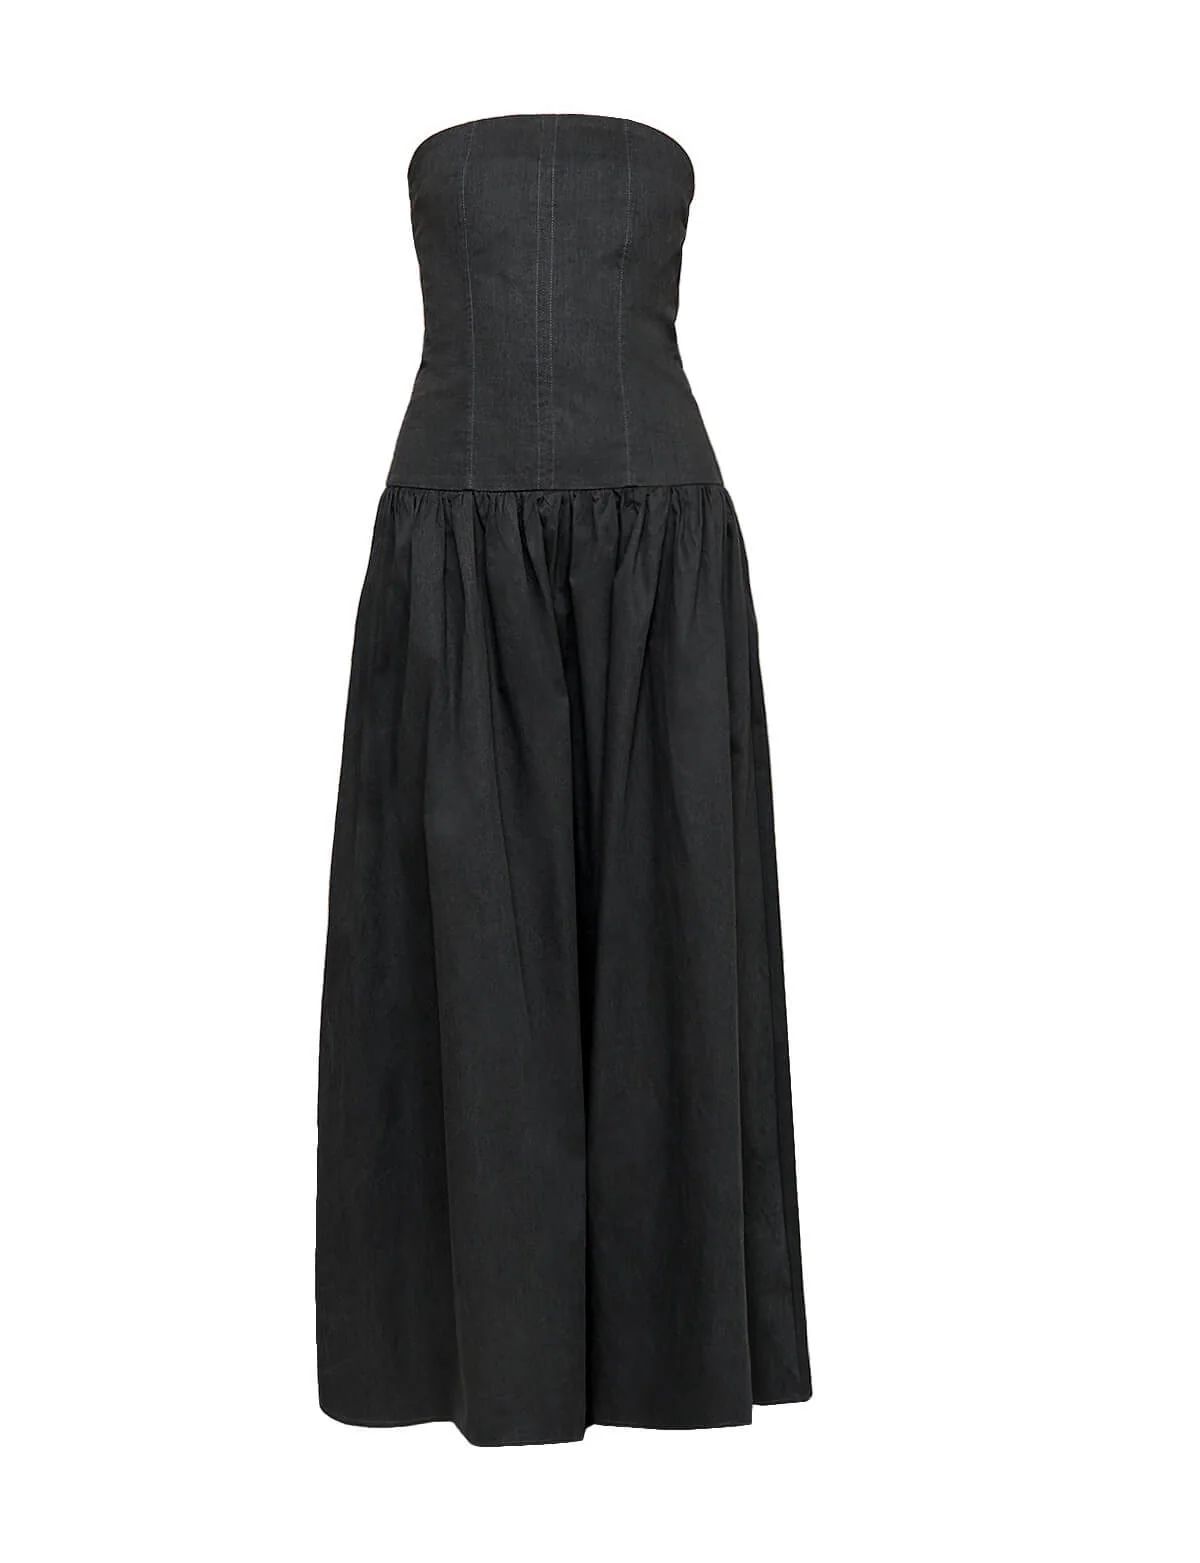 Charcoal Strapless Dress | Pixie Market